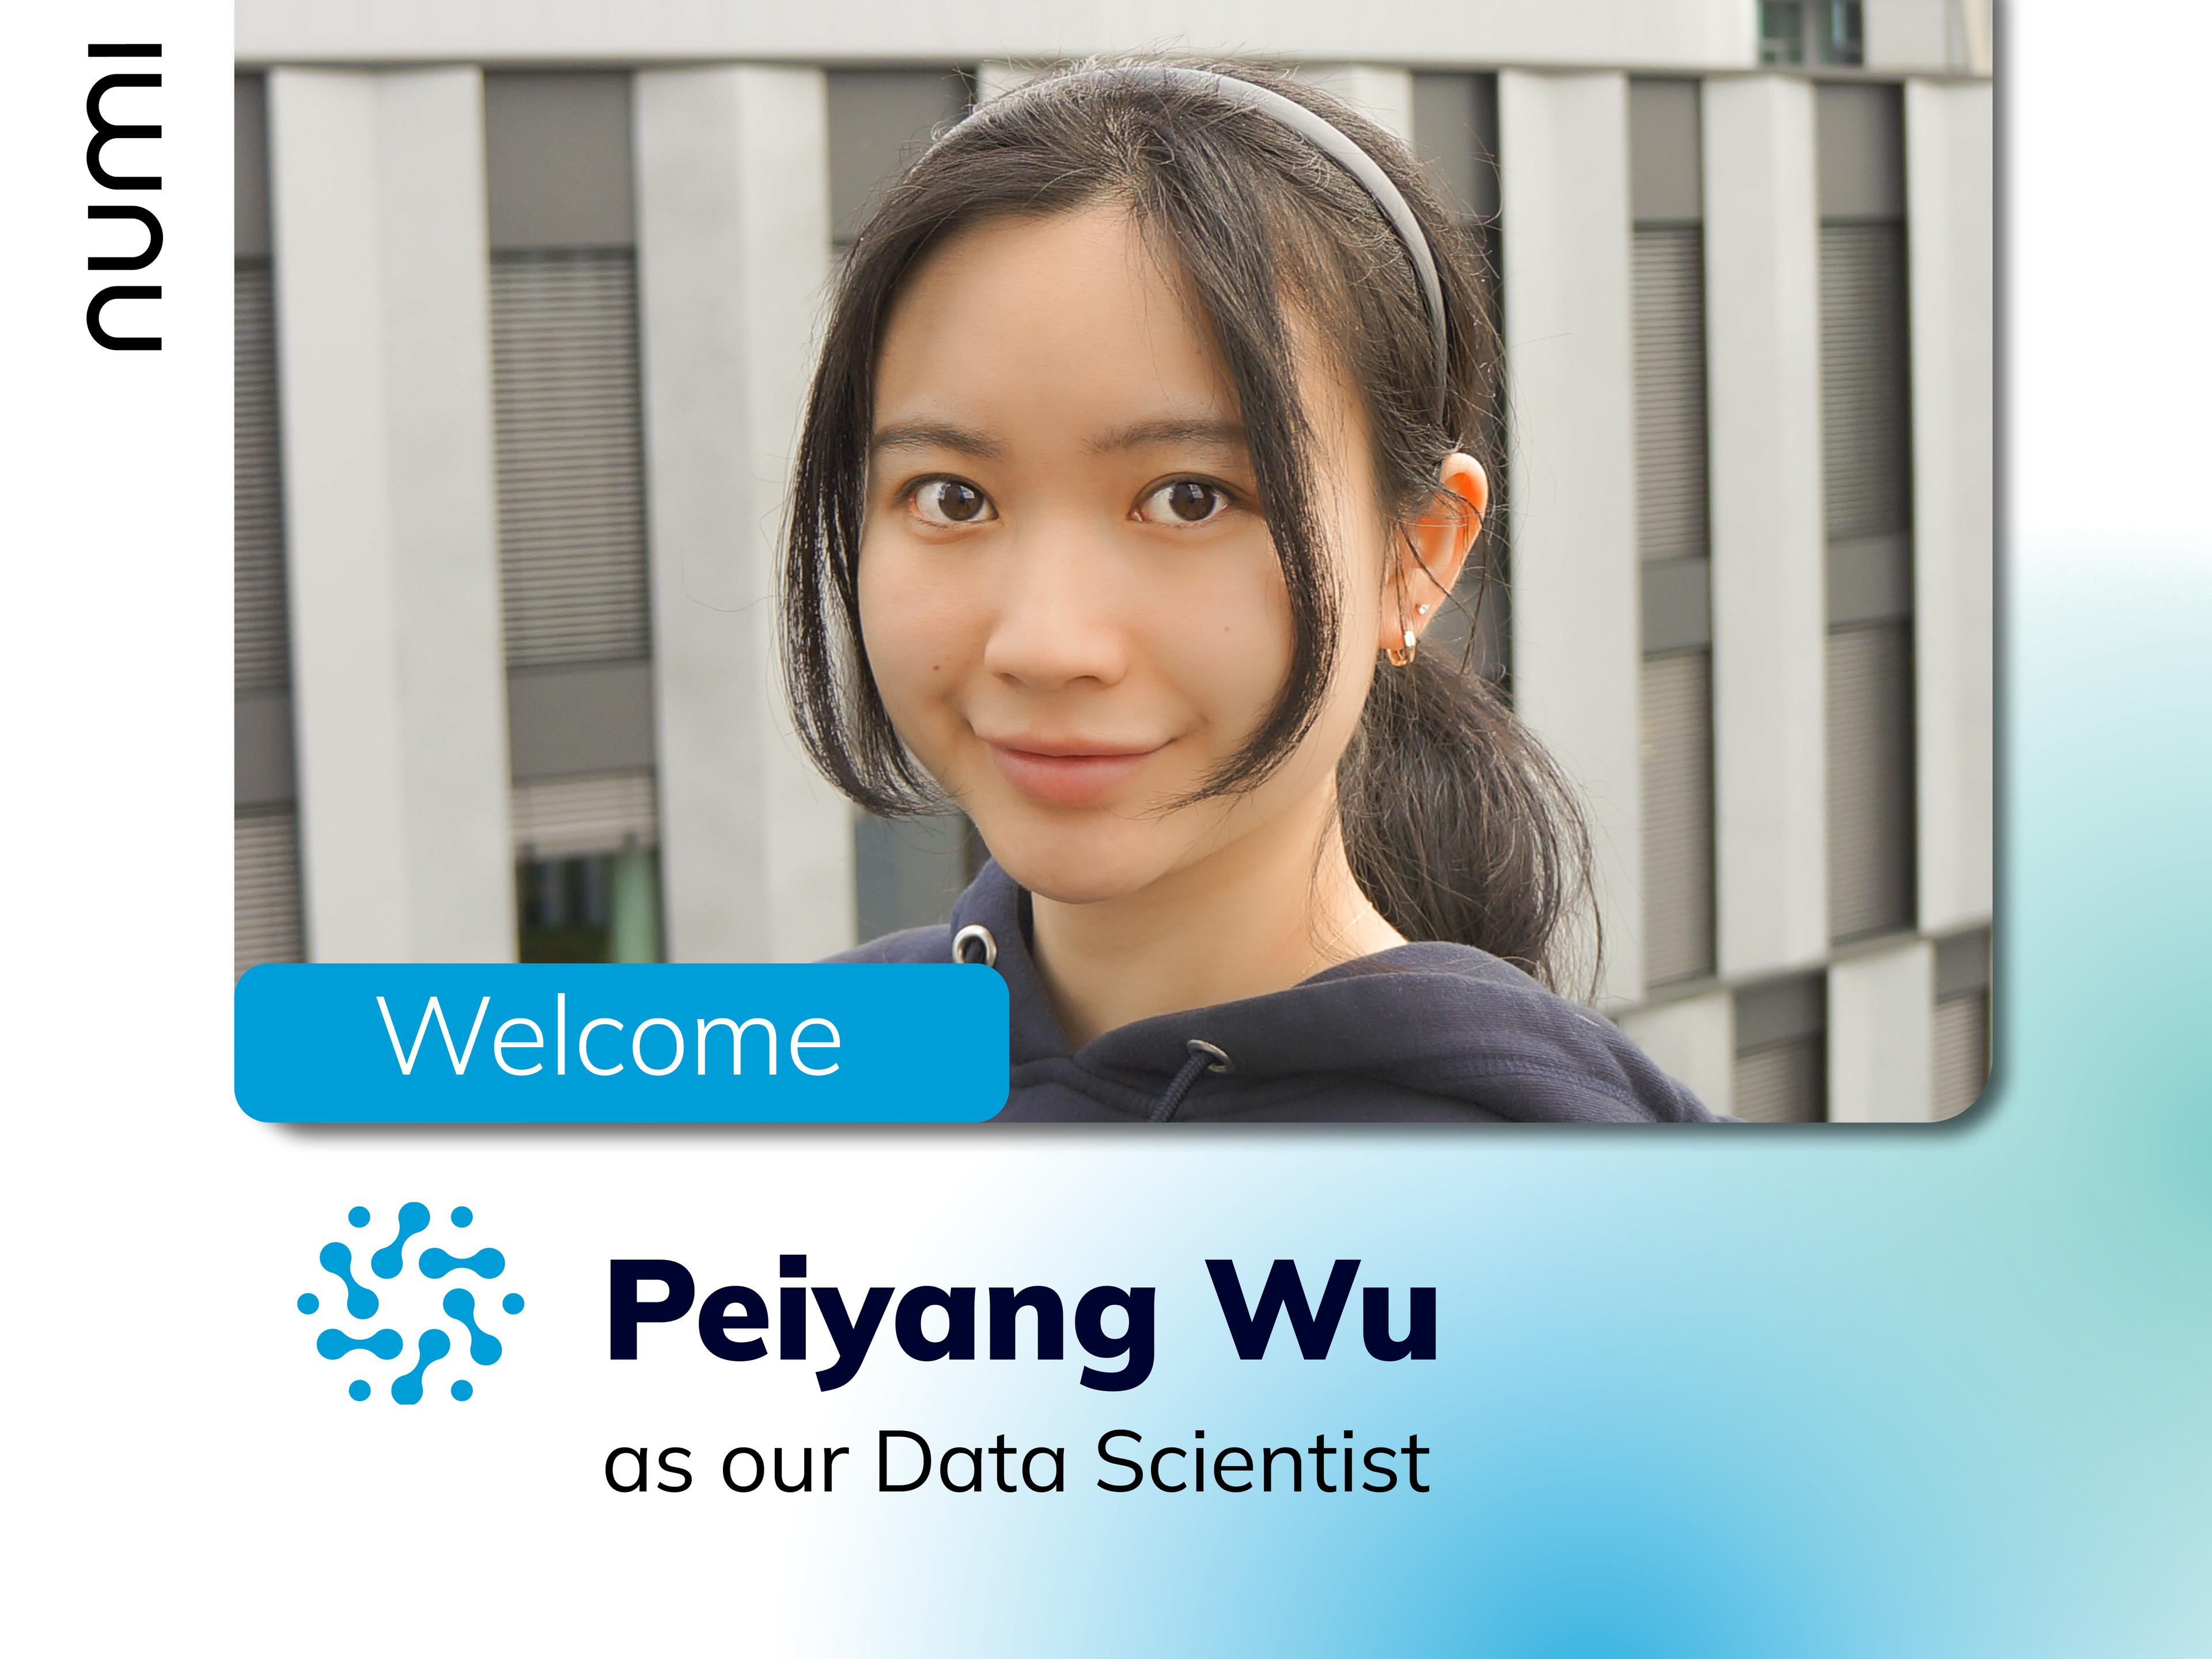 Willkommen im Team, Peiyang Wu!